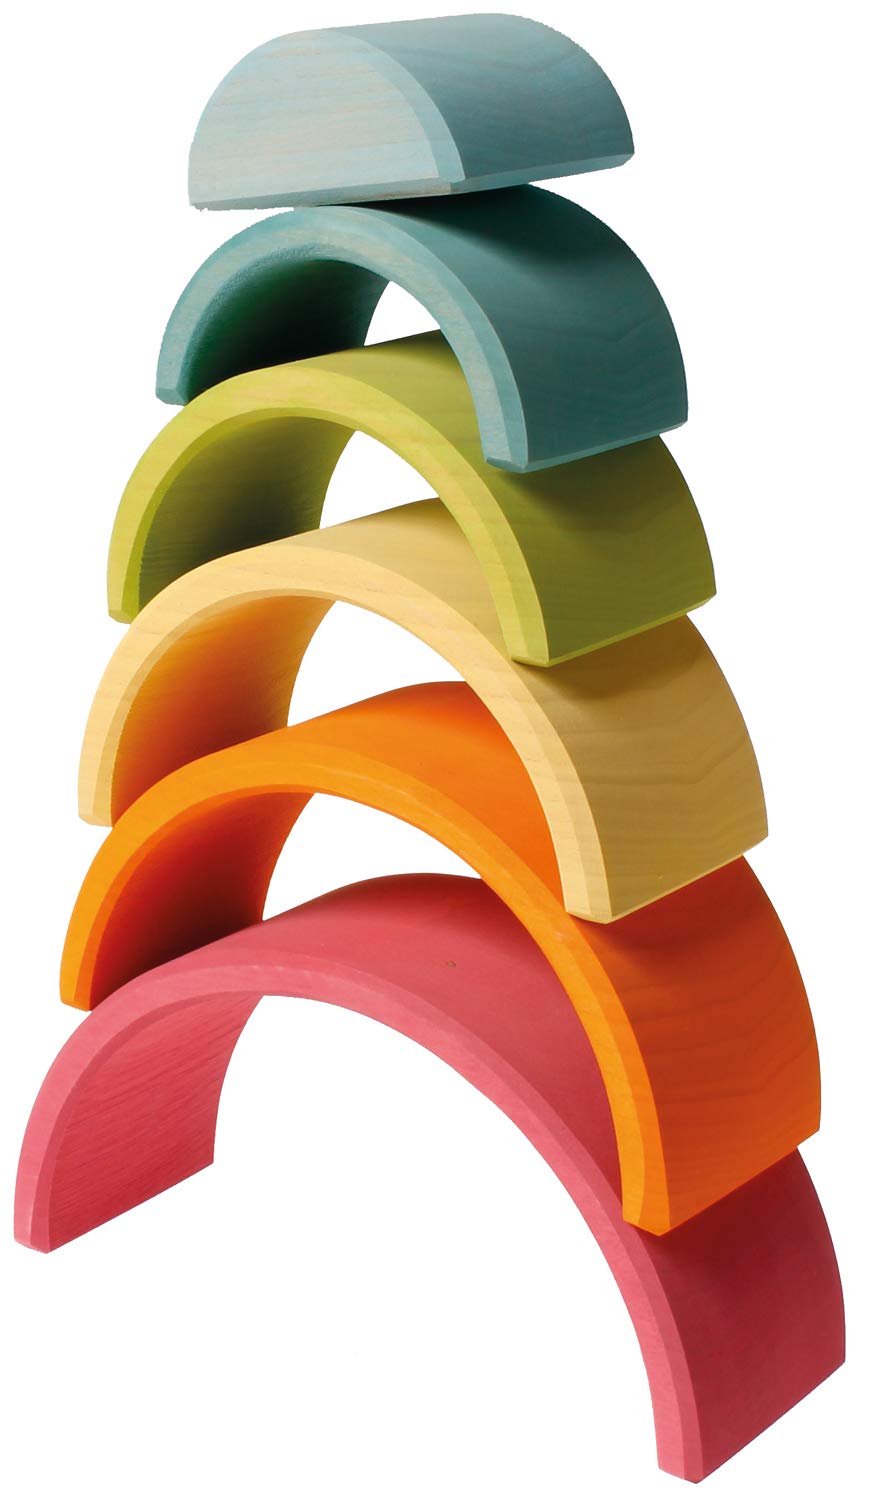 Grimm's Spiel und Holz Design Large 6-Piece Pastel Rainbow Stacker, Open-Ended Wooden Nesting & Stacking Toy Blocks